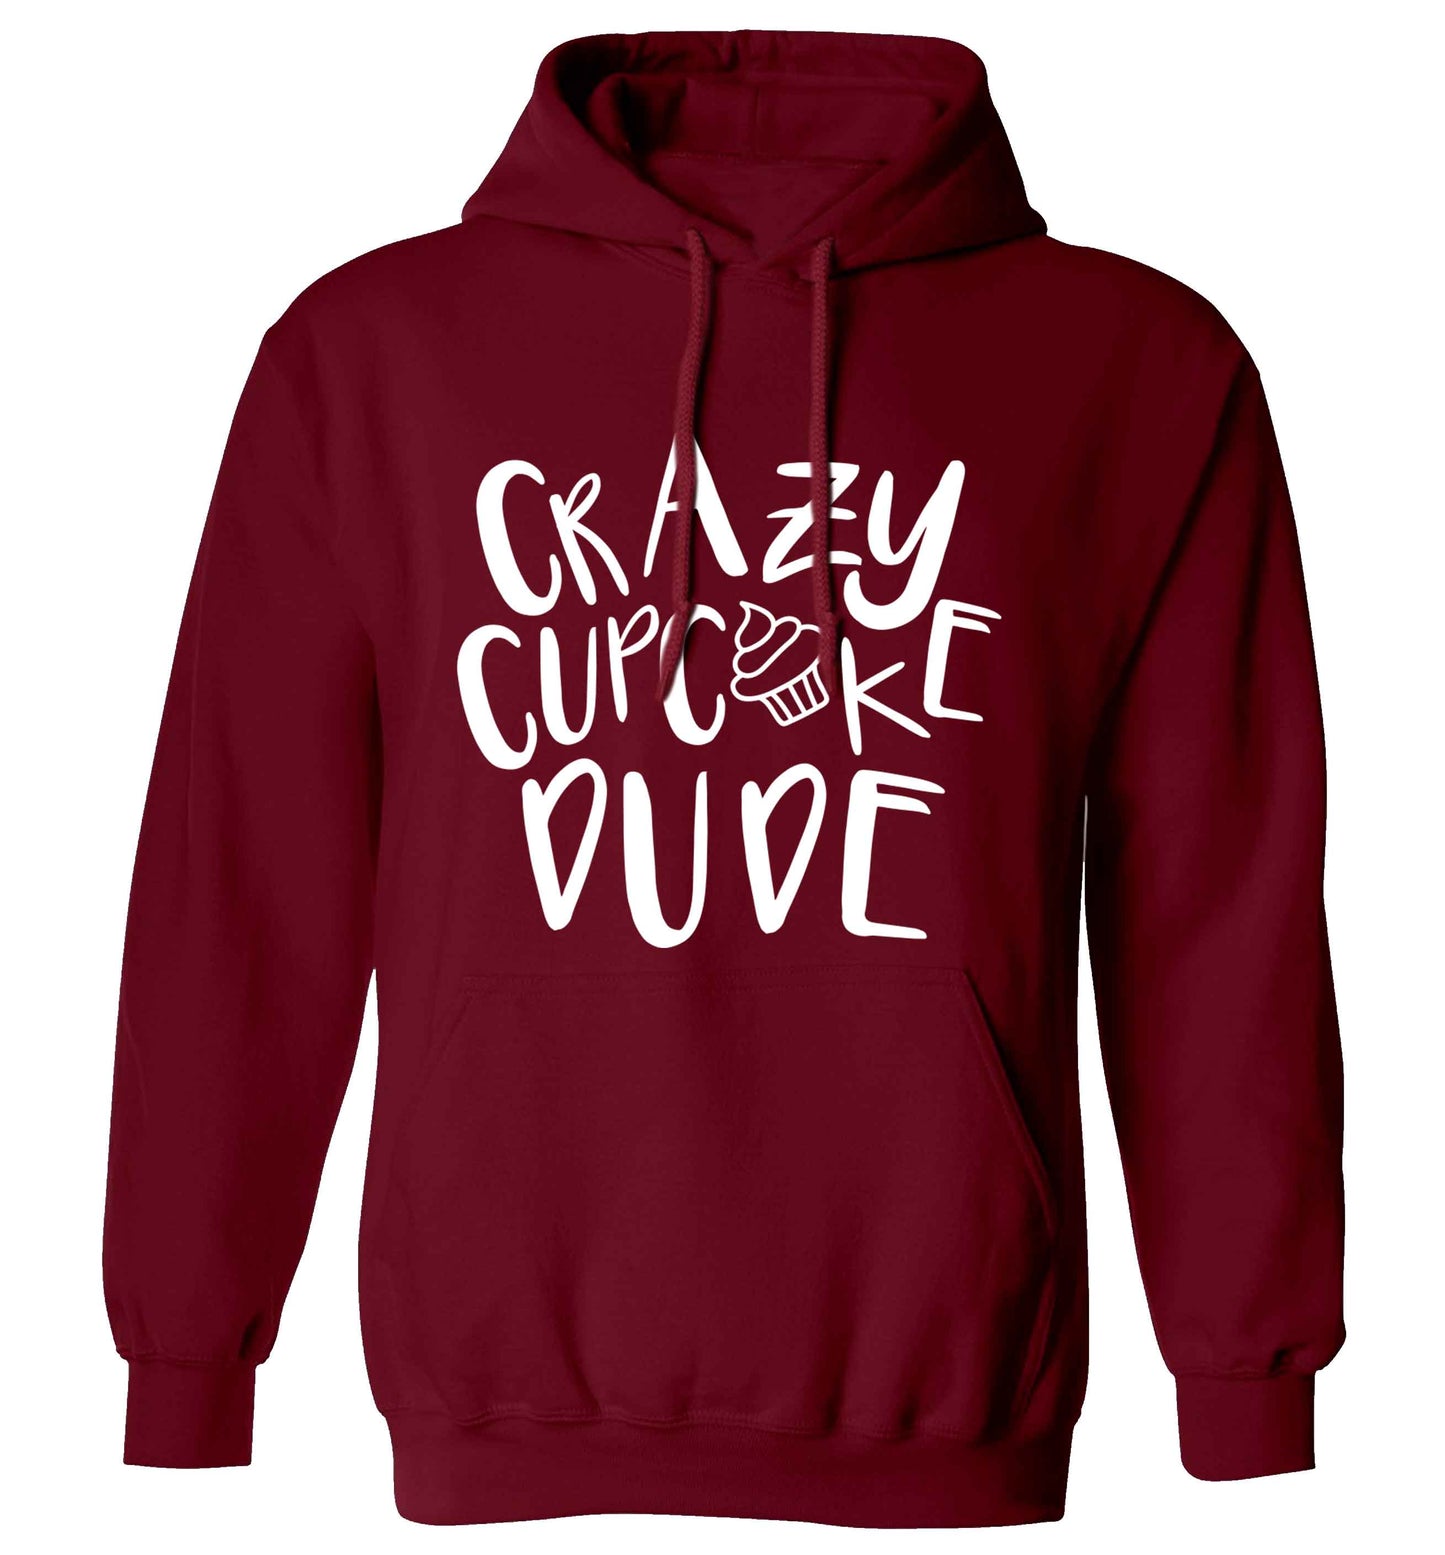 Crazy cupcake dude adults unisex maroon hoodie 2XL